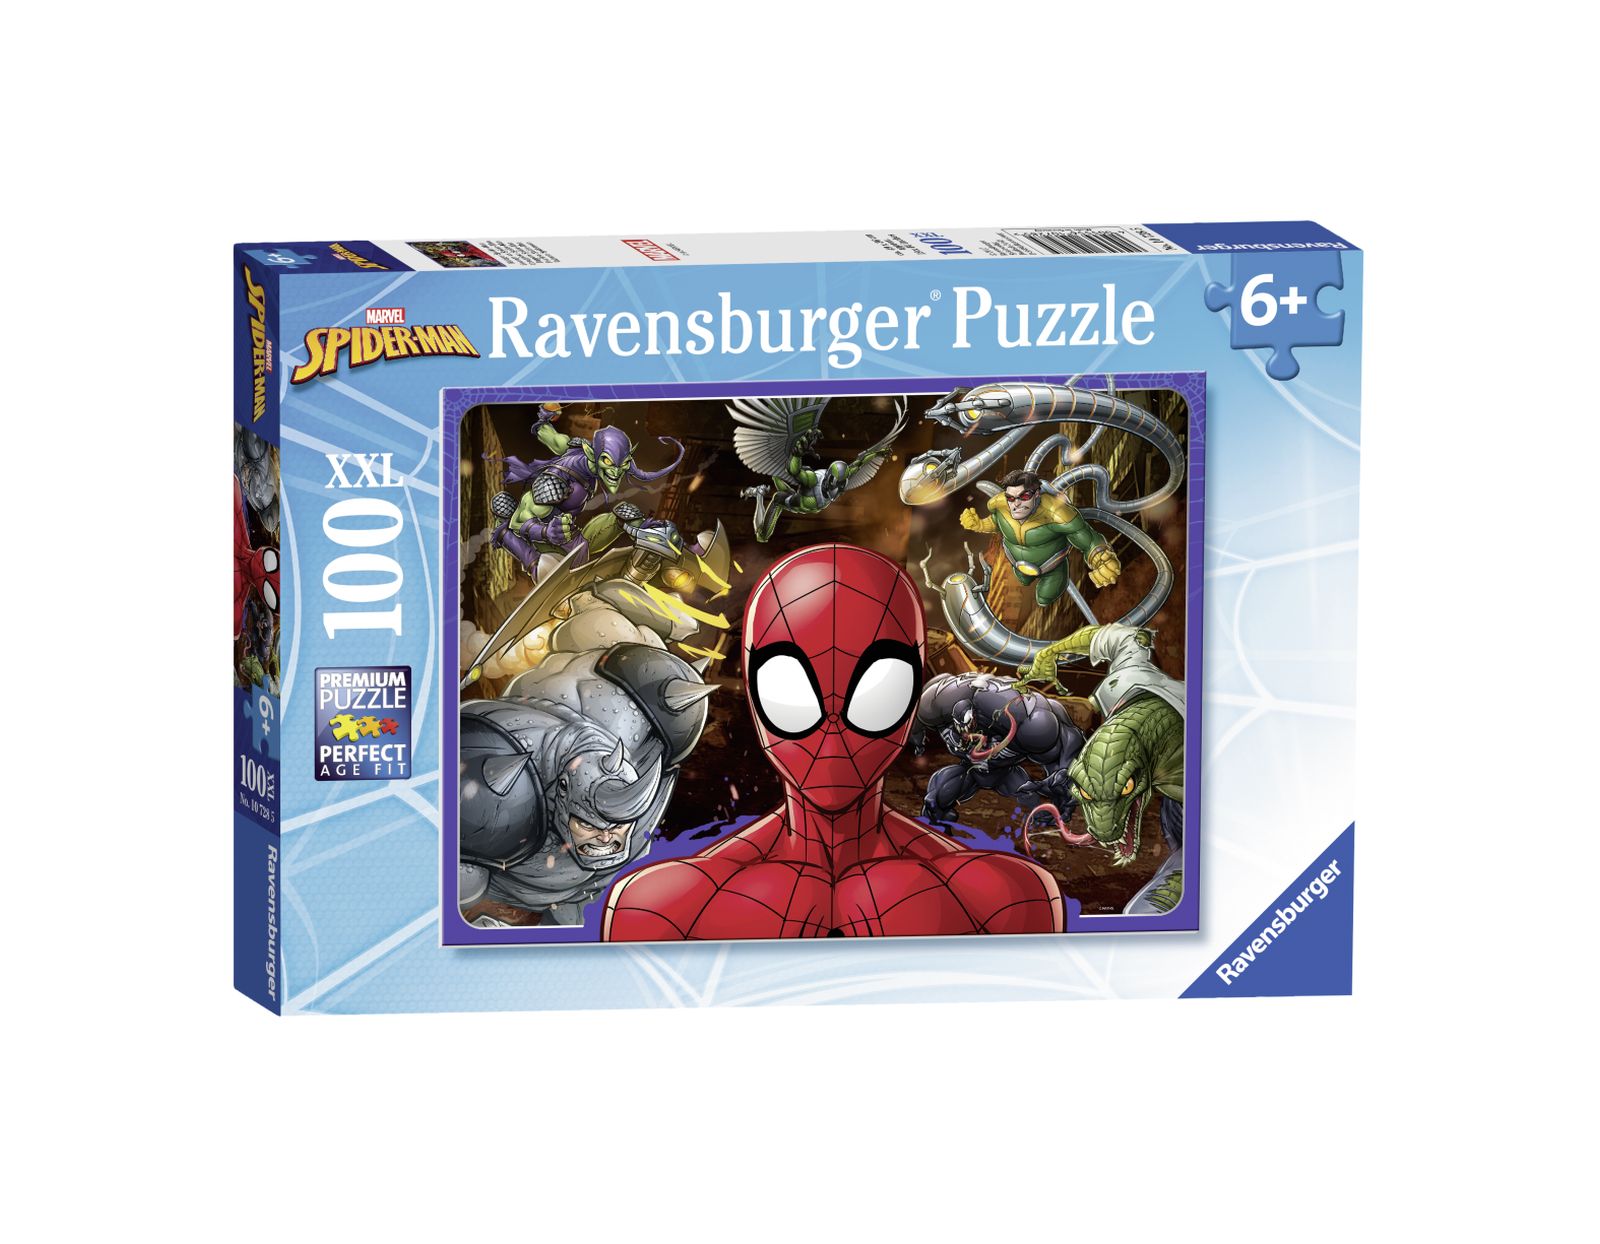 Ravensburger - puzzle 100 pezzi xxl - spiderman - RAVENSBURGER, Avengers, Spiderman